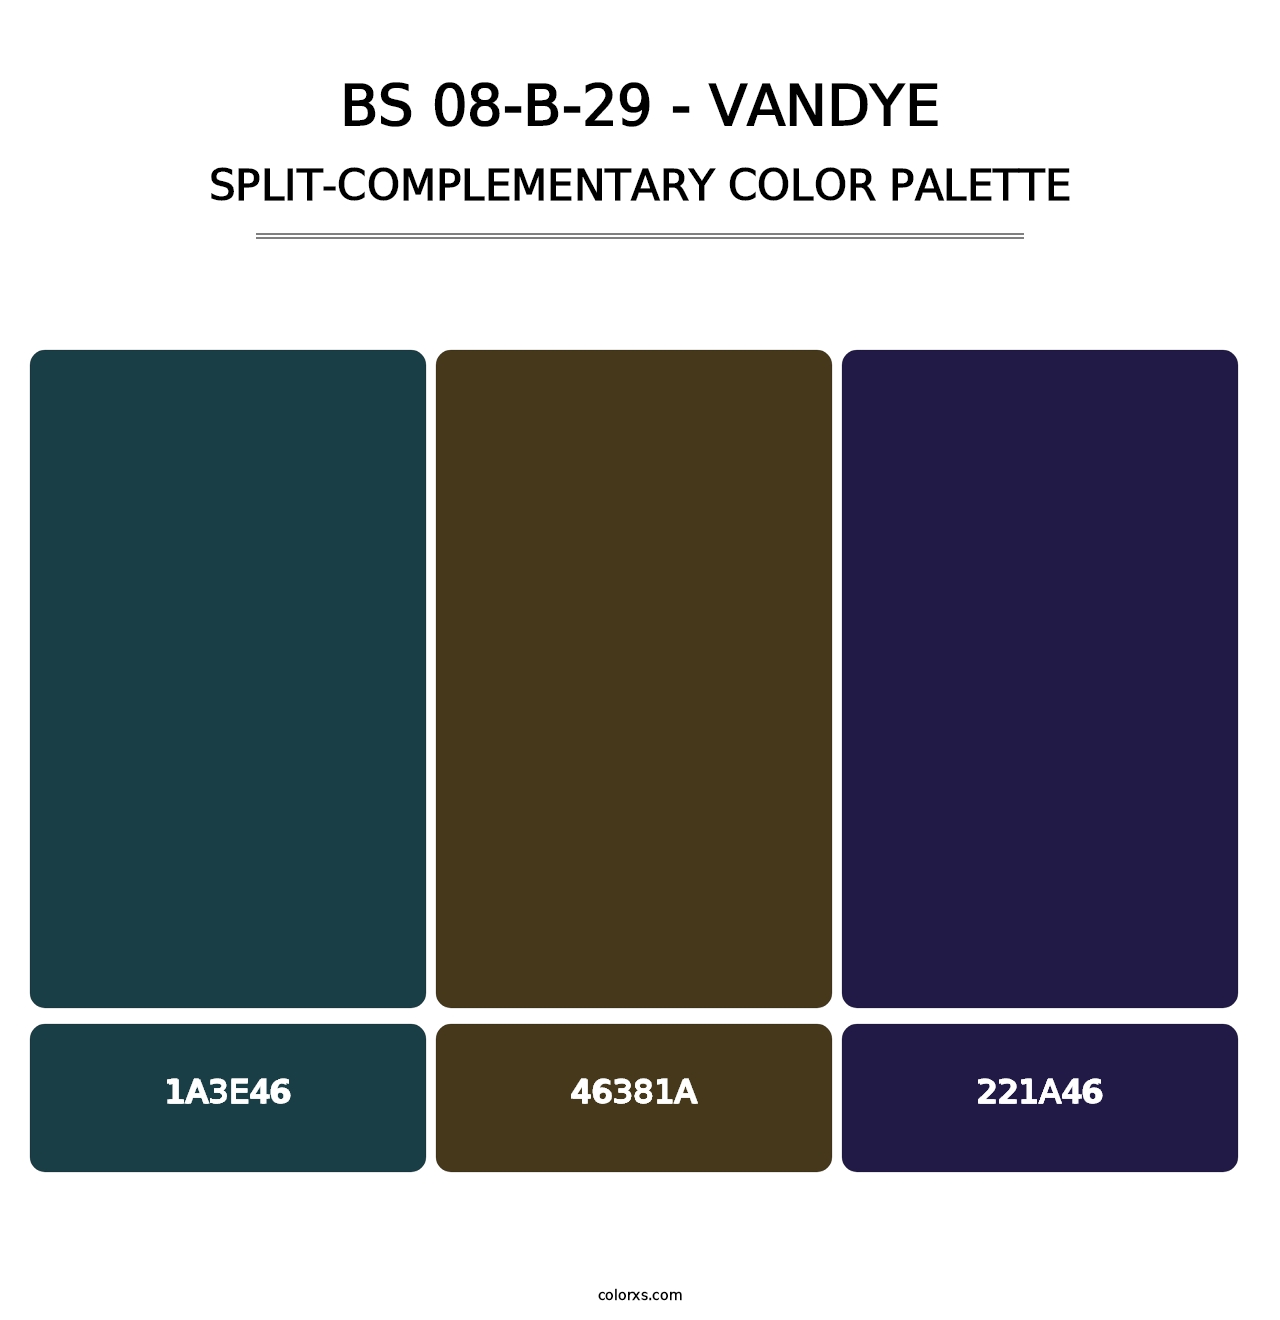 BS 08-B-29 - Vandye - Split-Complementary Color Palette